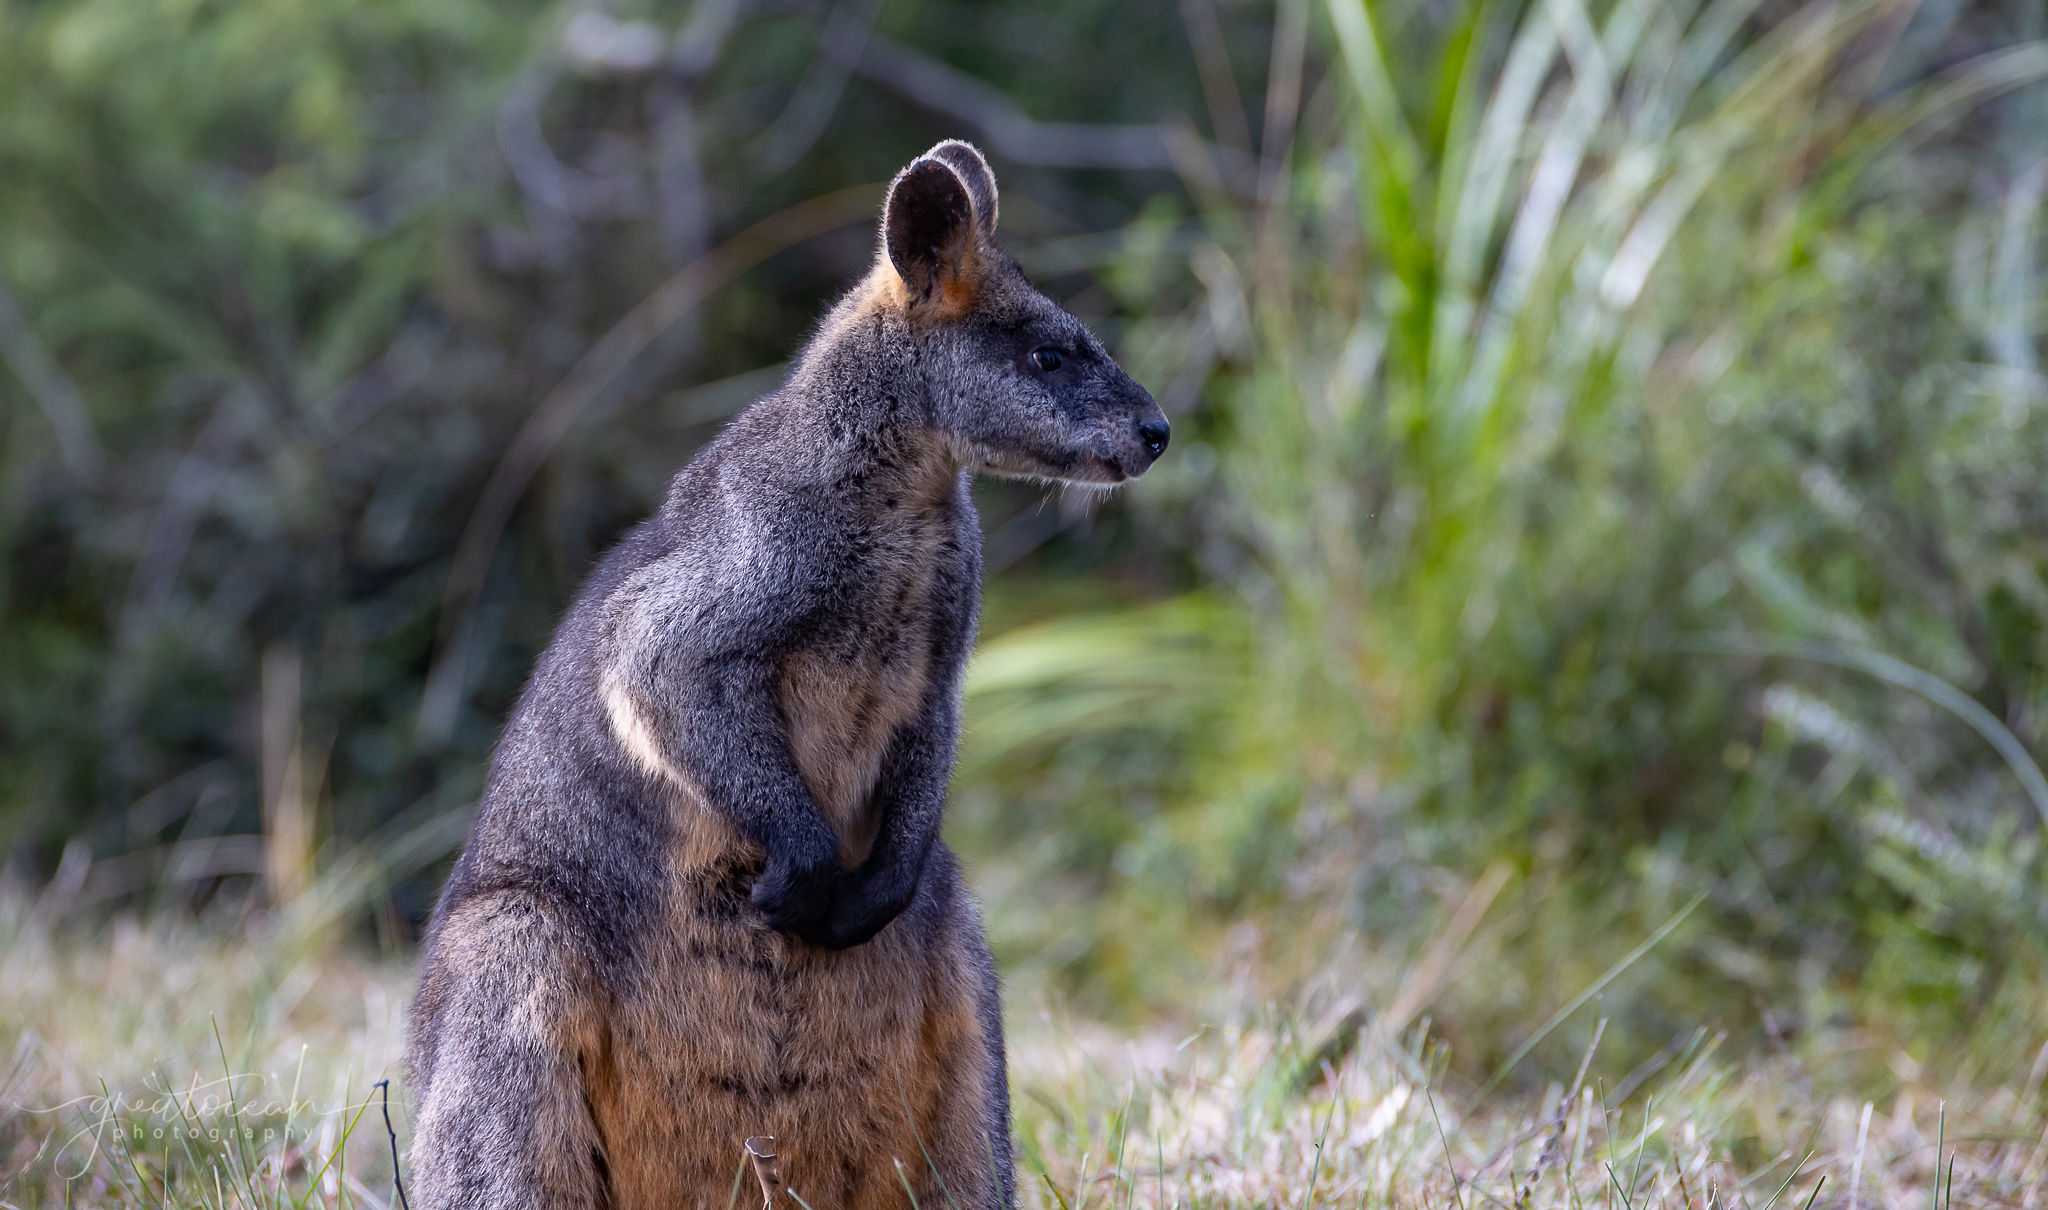 Wallaby at Wildlife Wonders wildlife sanctuary